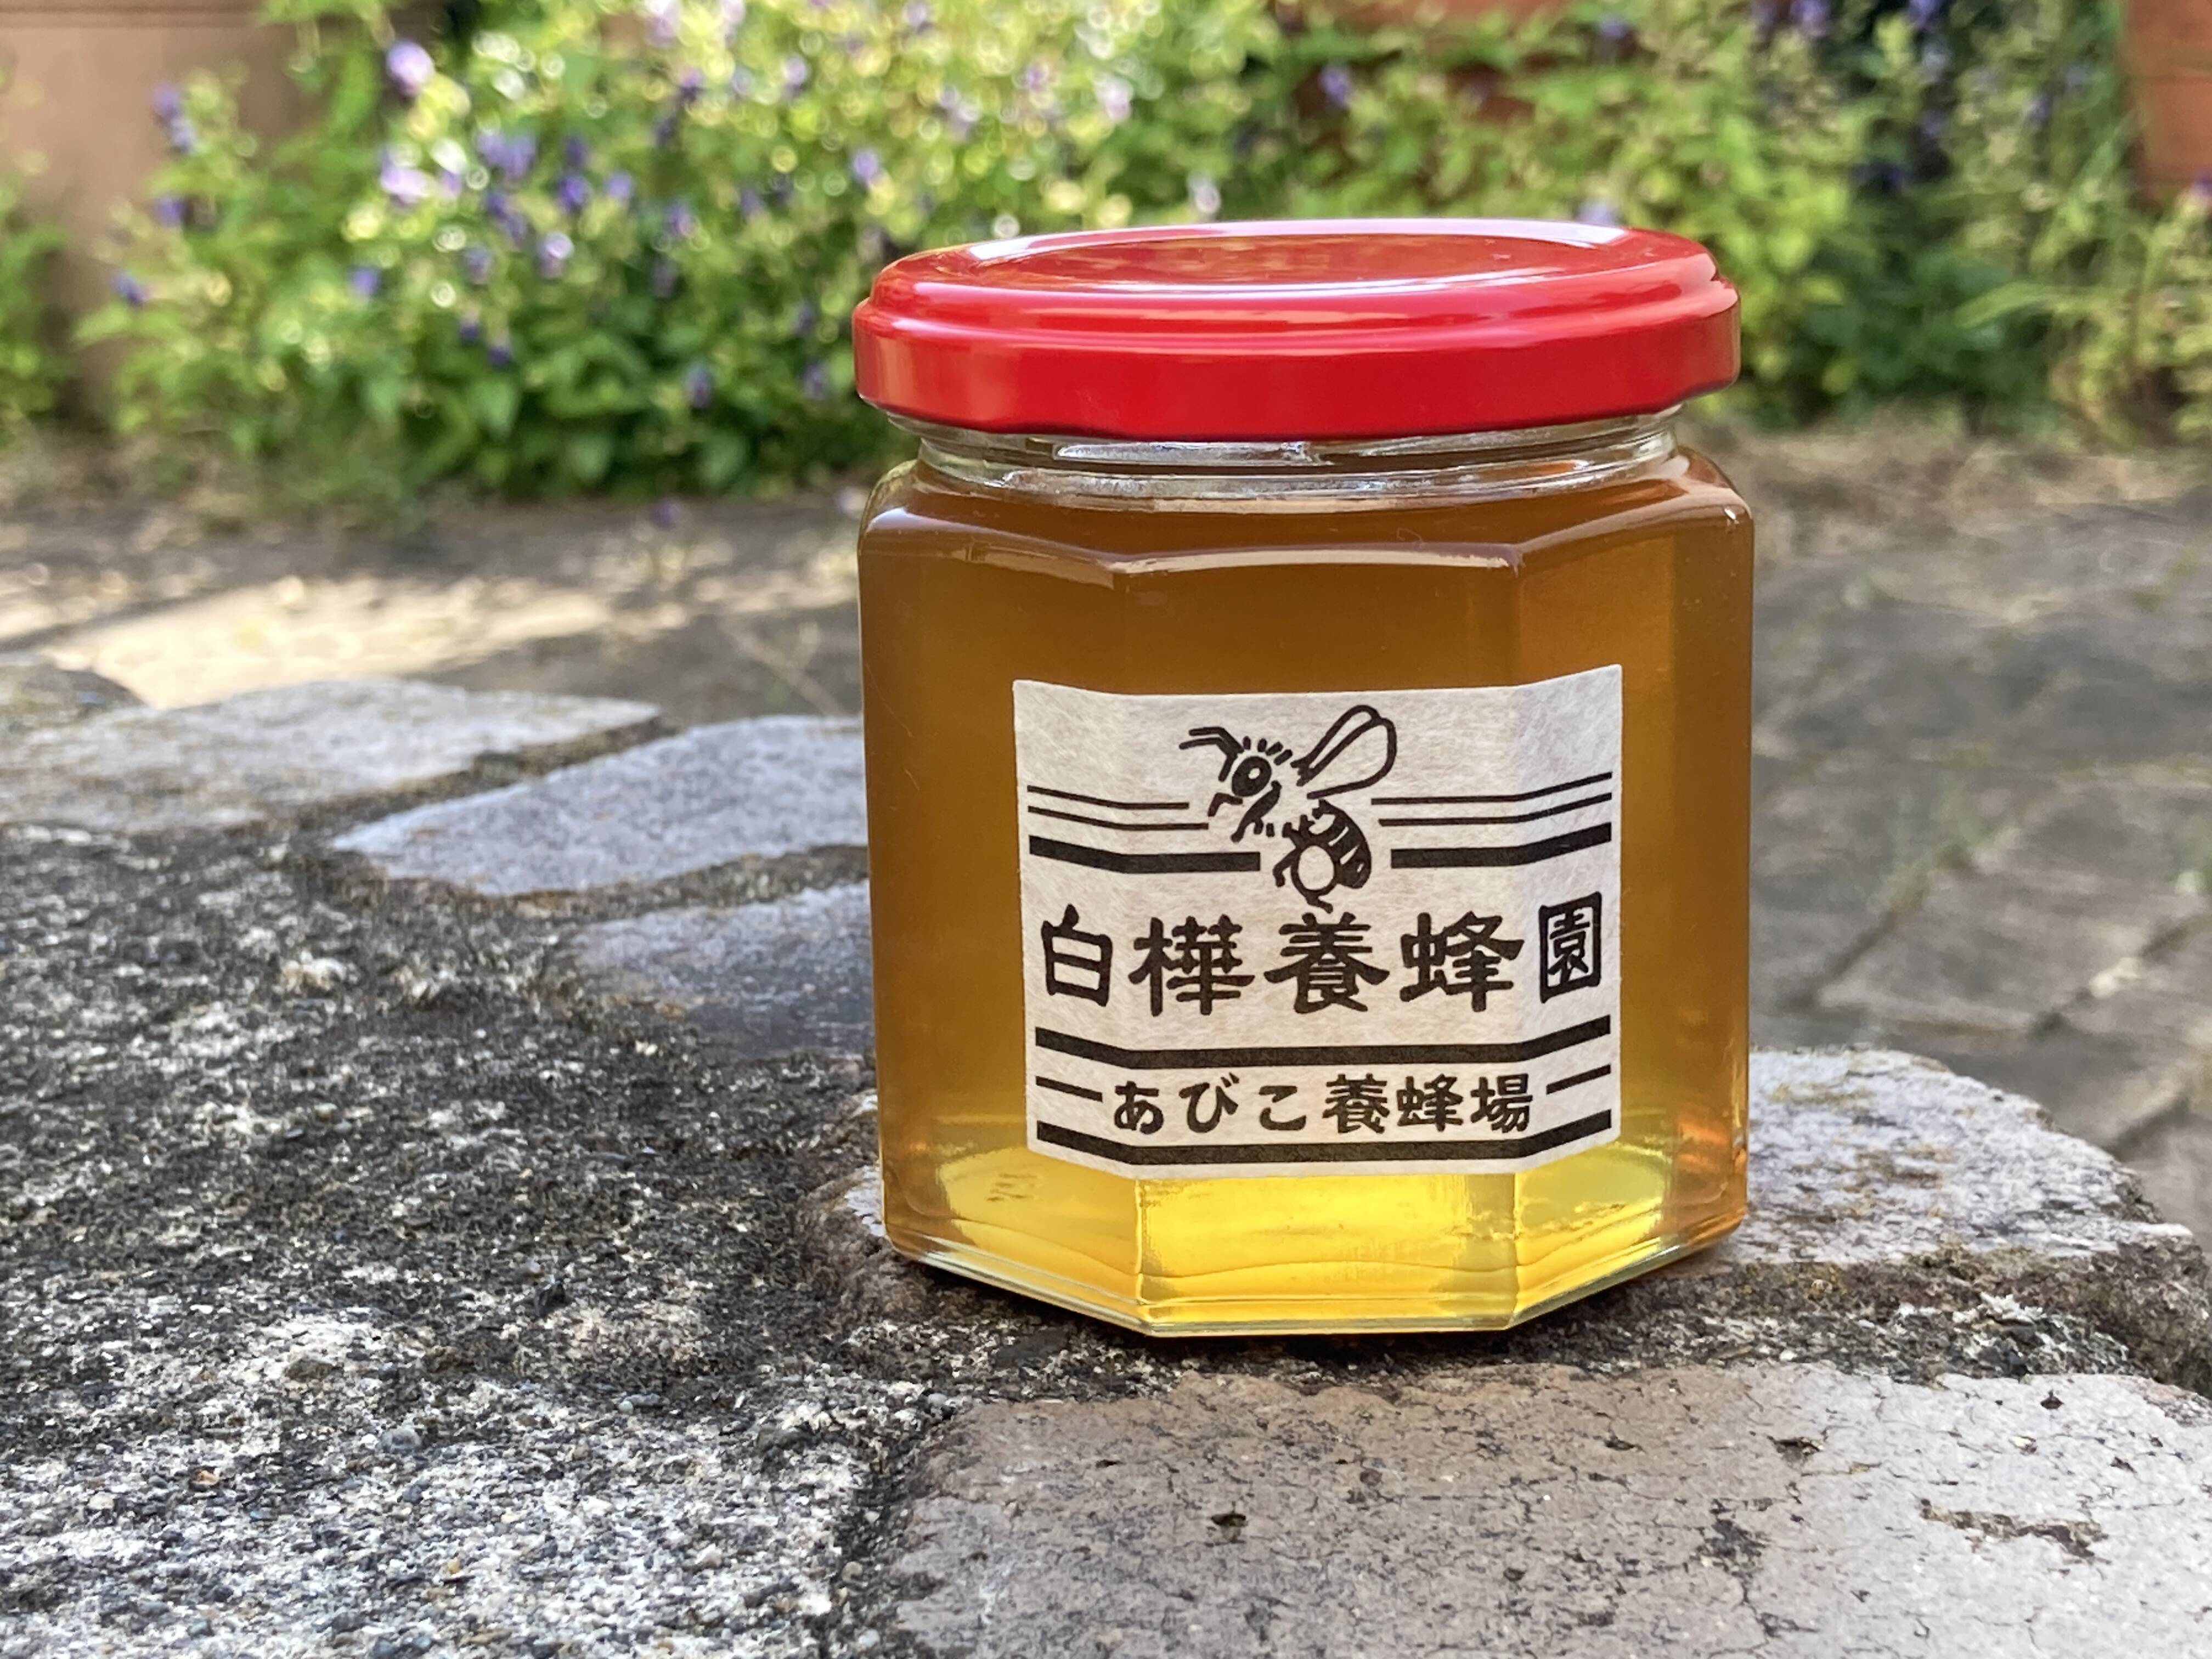 ⭐︎新発売⭐︎ 非加熱無添加、西洋ミツバチの純国産はちみつ【200g